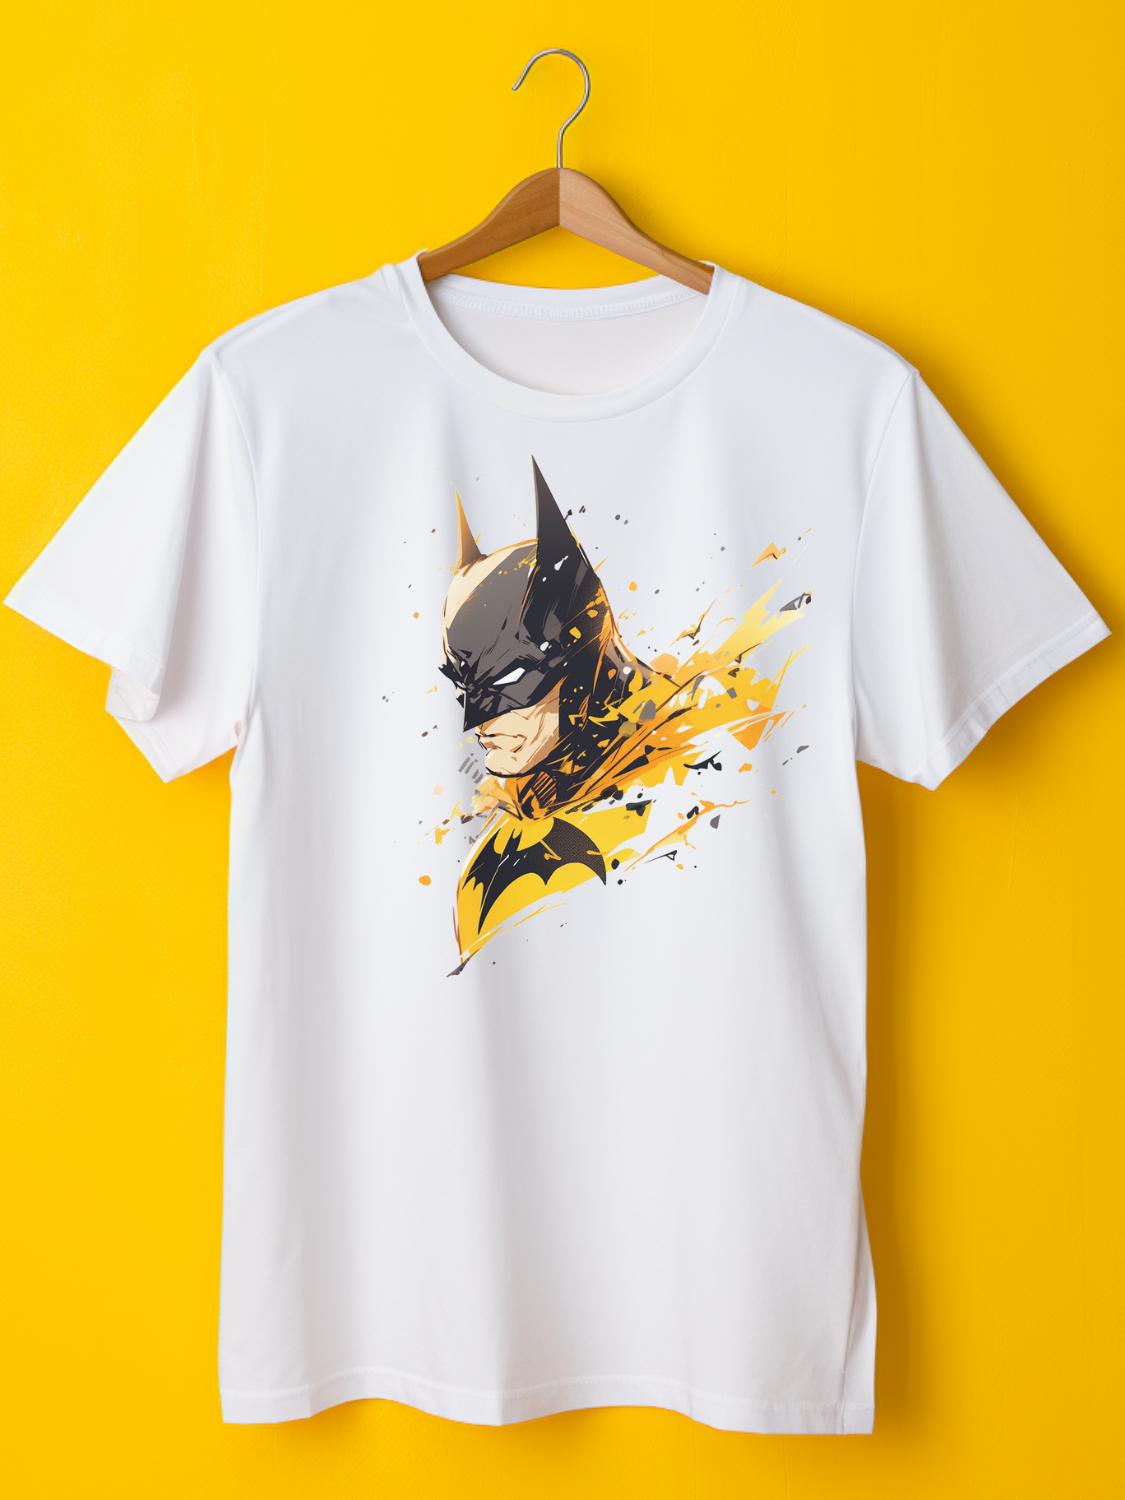 Batman Printed T-Shirt 101